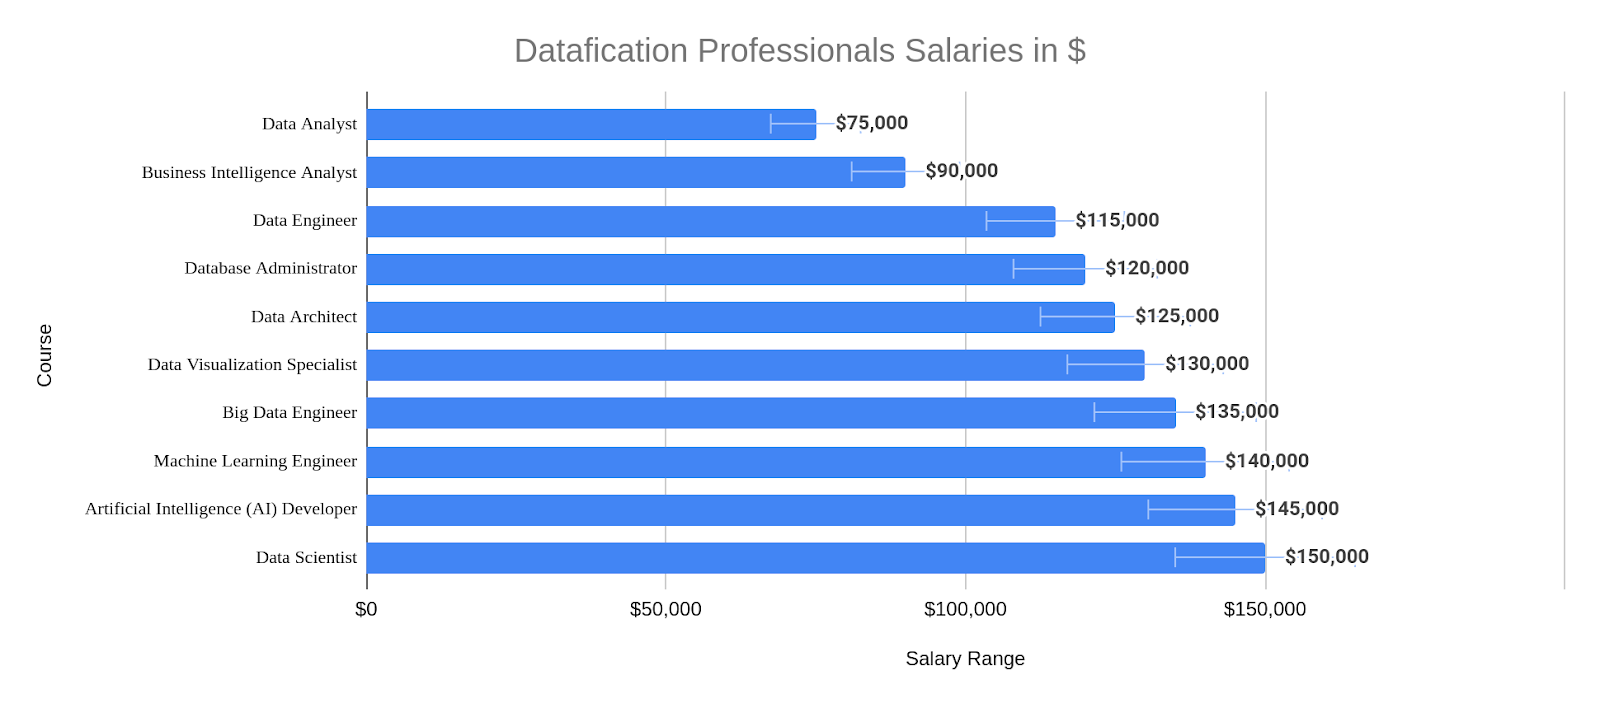 Datafication Professionals Salaries in $